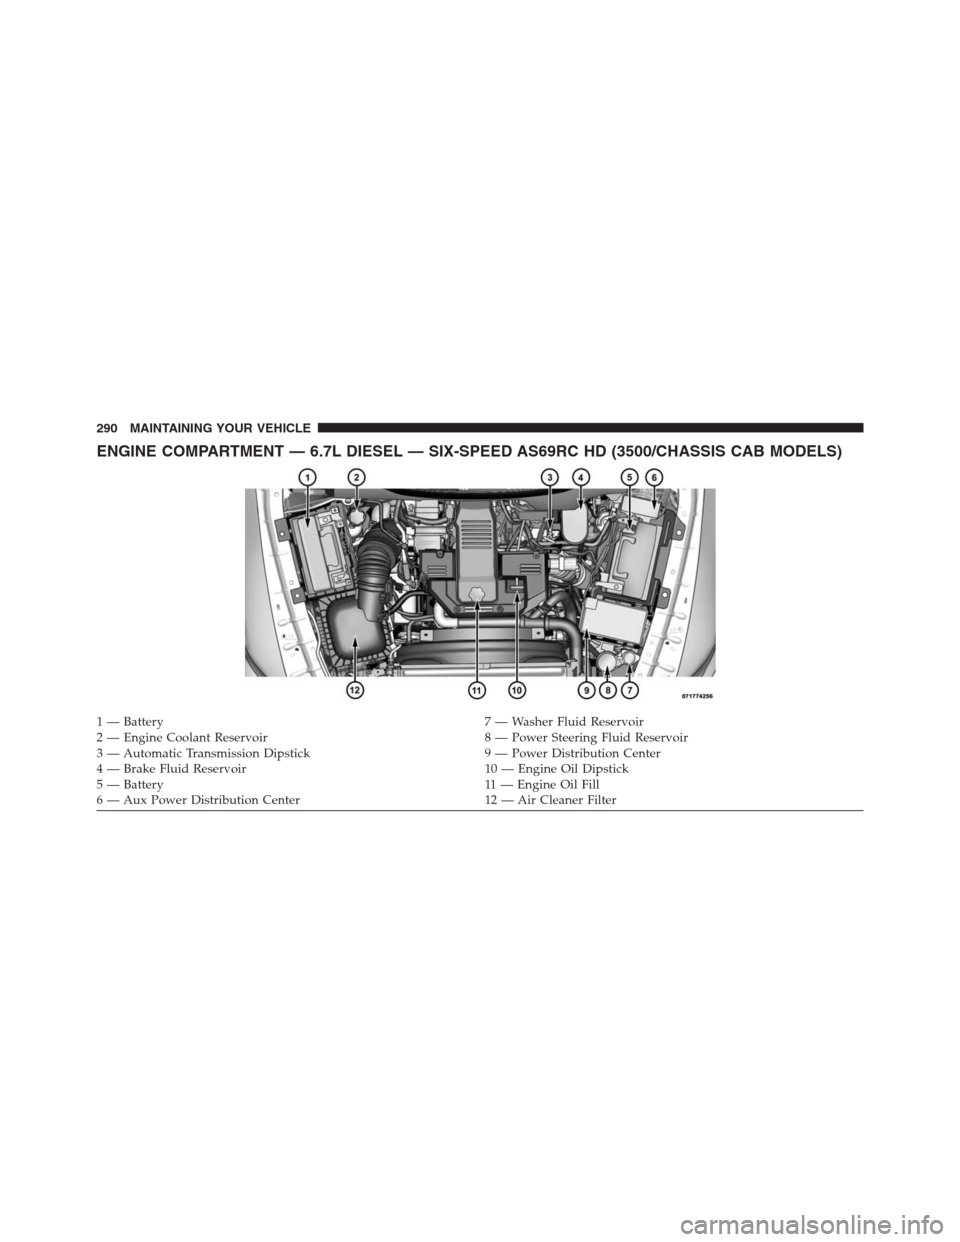 Ram 3500 2014  Diesel Supplement ENGINE COMPARTMENT — 6.7L DIESEL — SIX-SPEED AS69RC HD (3500/CHASSIS CAB MODELS)
1 — Battery 7 — Washer Fluid Reservoir
2 — Engine Coolant Reservoir 8 — Power Steering Fluid Reservoir
3 �